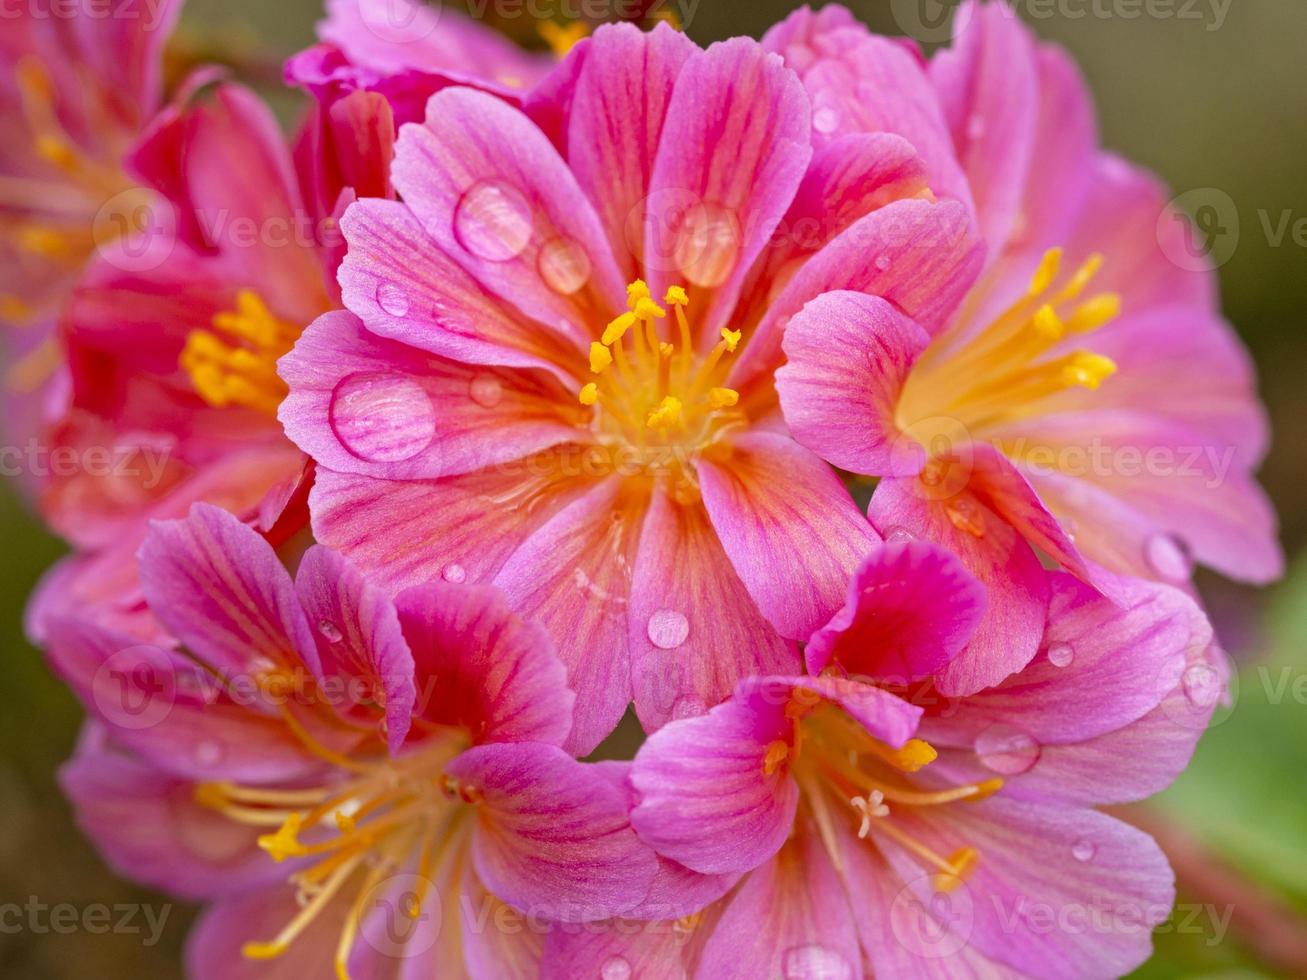 Bonitas flores de color rosa lewisia elise con gotas de agua foto